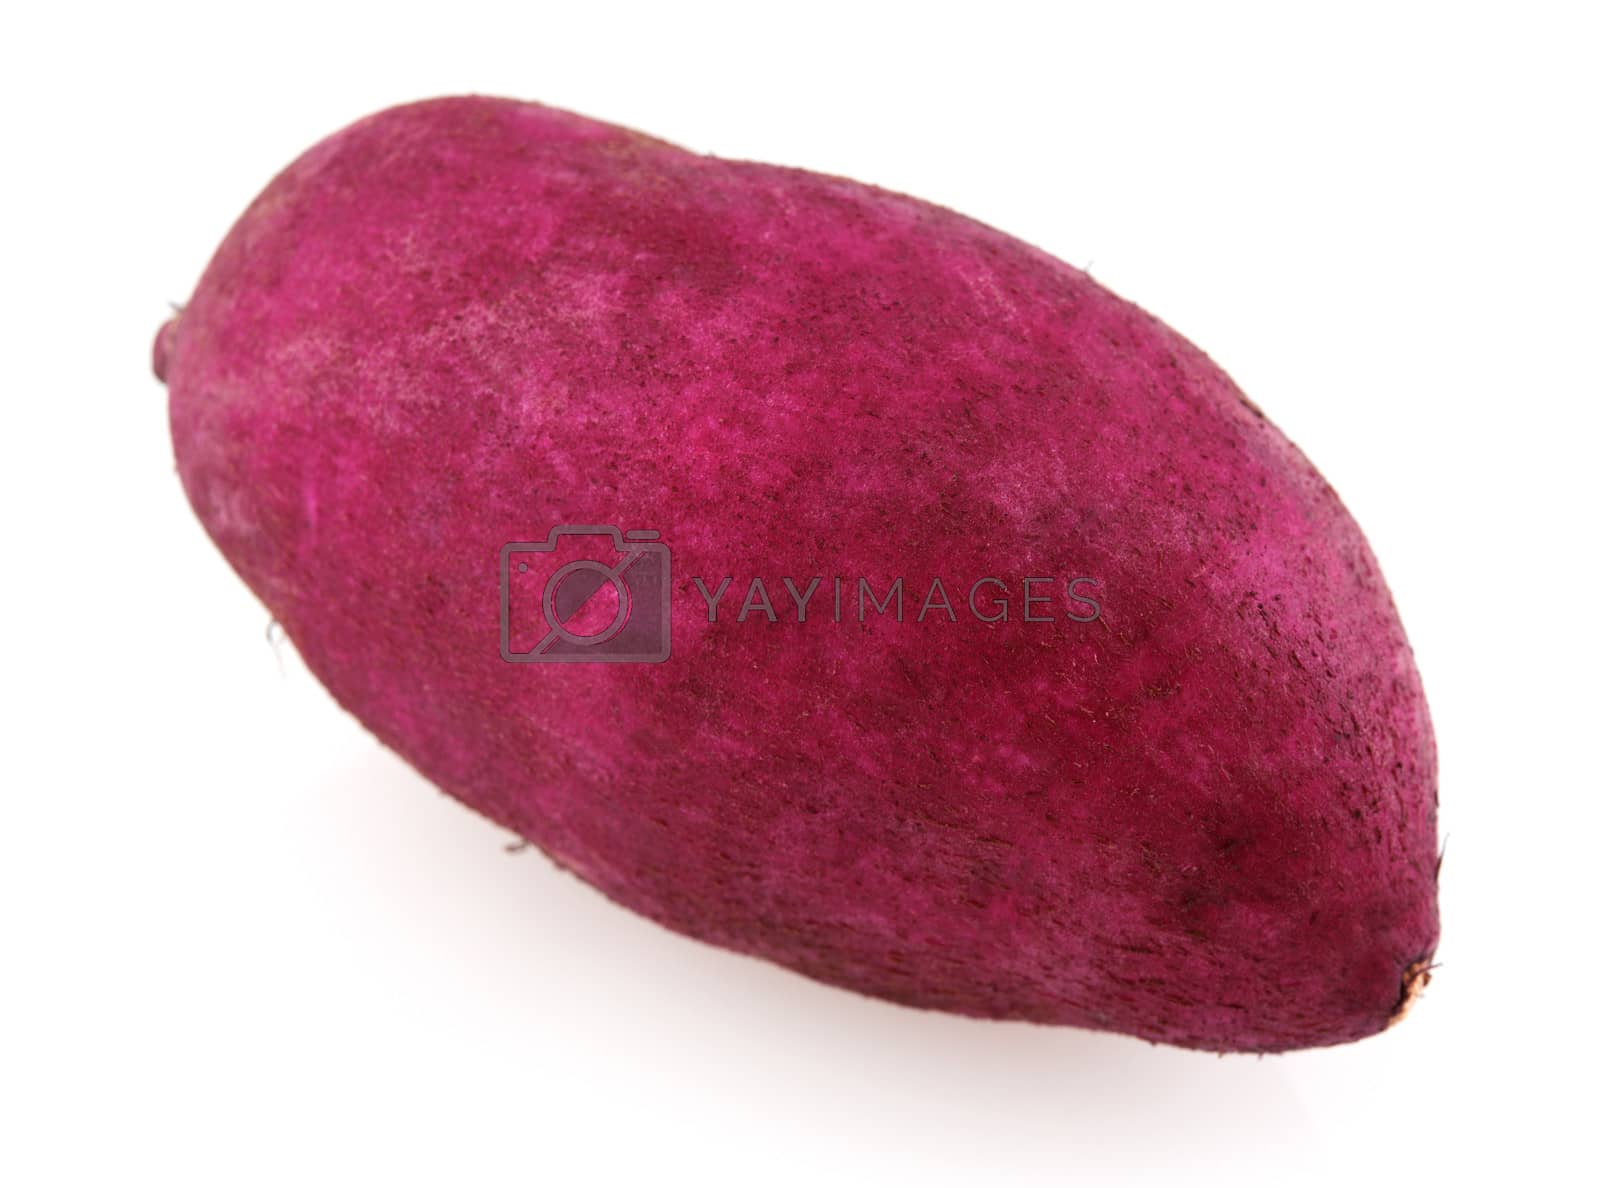 Royalty free image of sweet potato by szefei